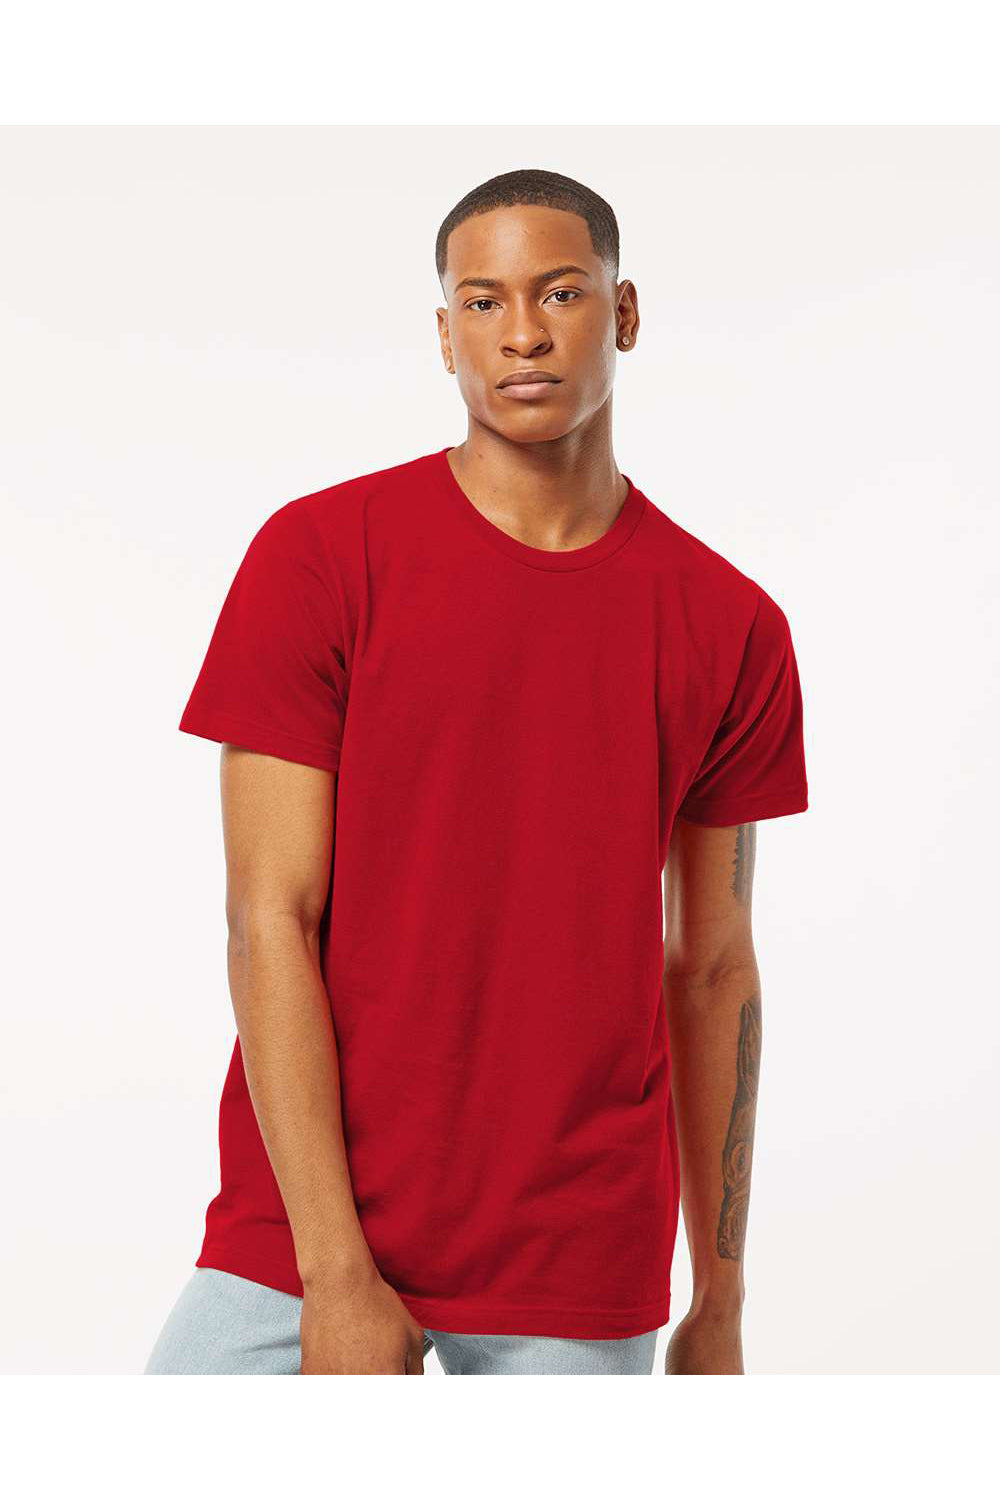 Tultex 202 Mens Fine Jersey Short Sleeve Crewneck T-Shirt Cardinal Red Model Front